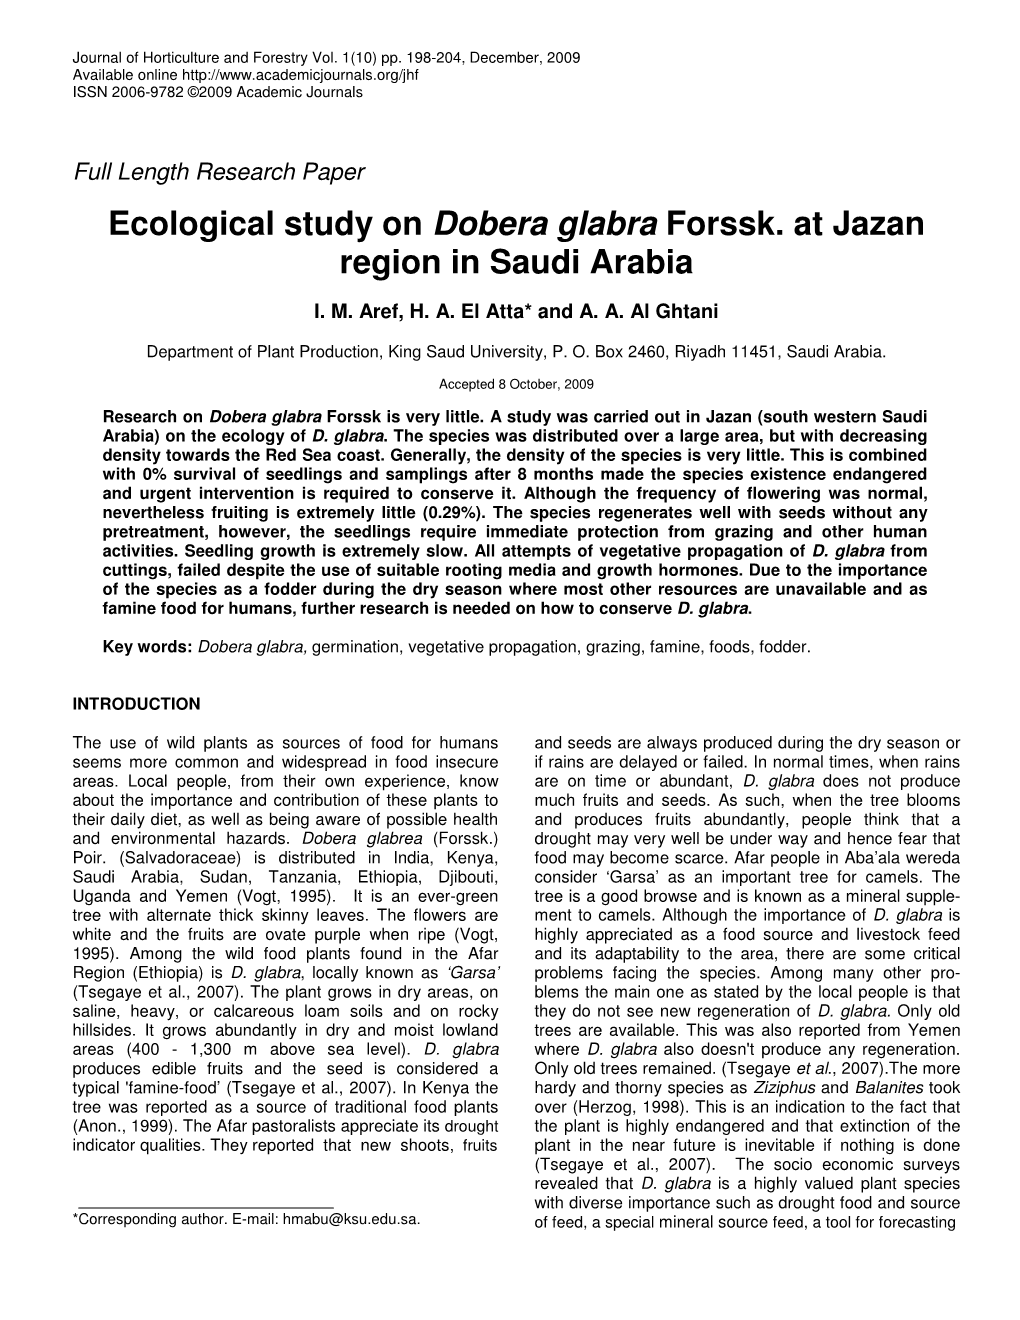 Ecological Study on Dobera Glabra Forssk. at Jazan Region in Saudi Arabia